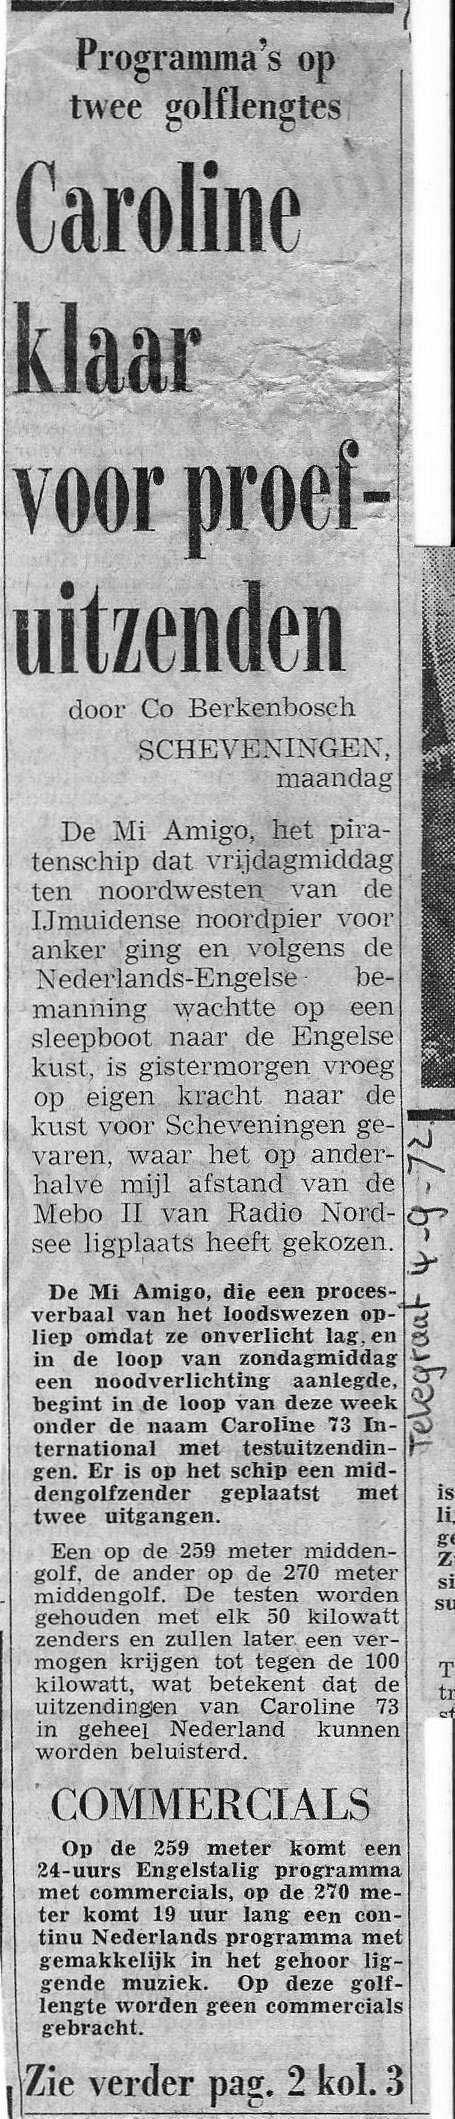 De Telegraaf 4th September 1972